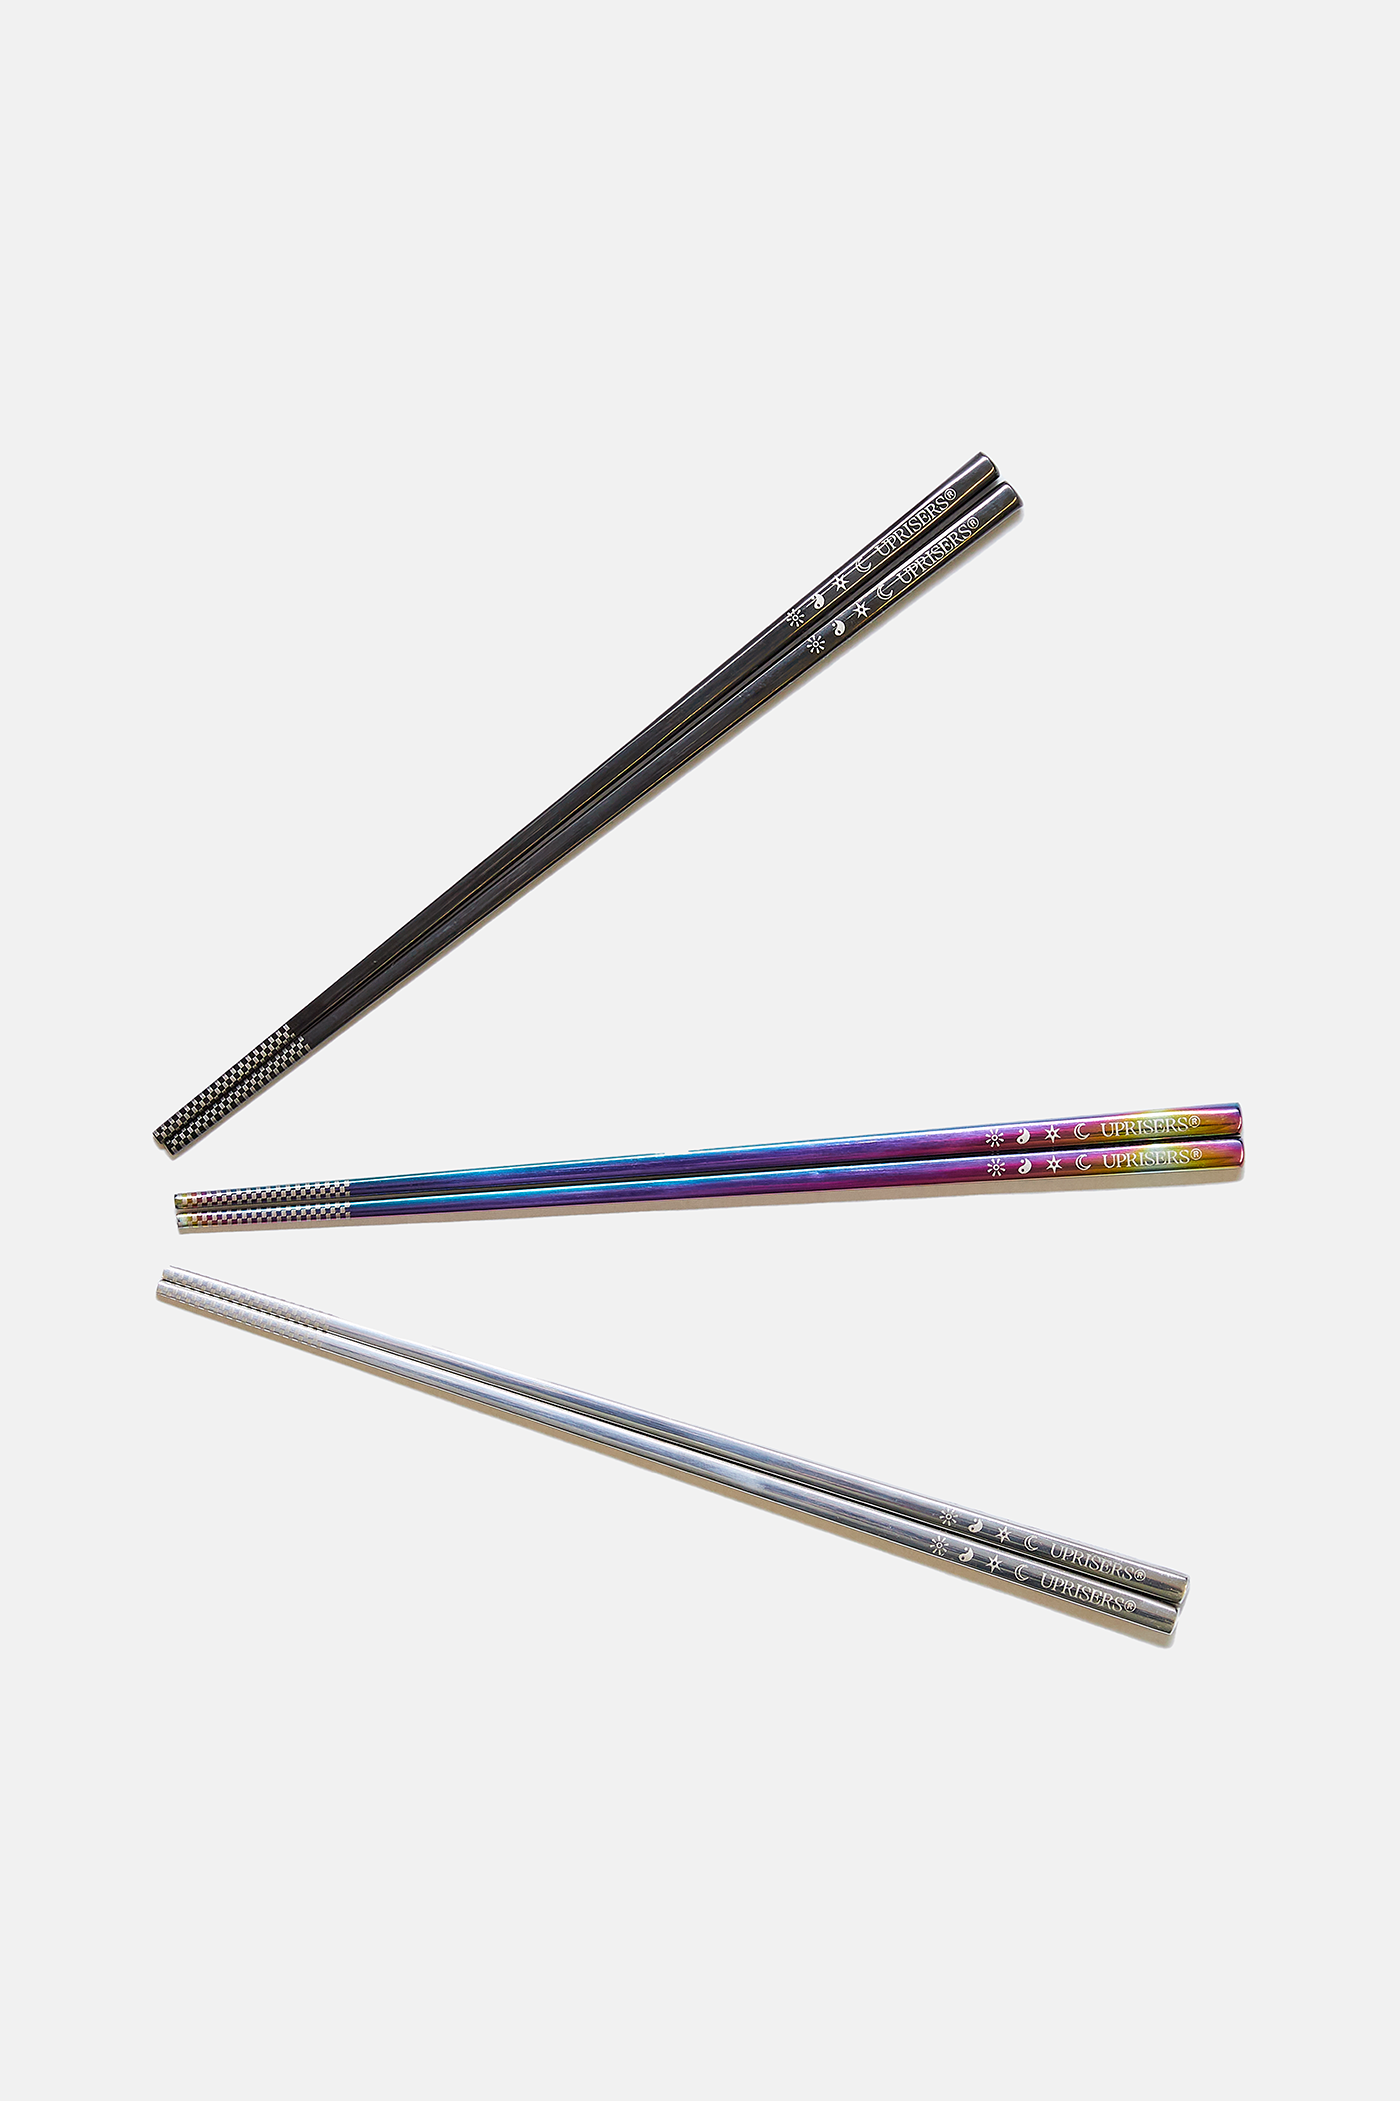 UPRISERS Stainless Steel Chopsticks